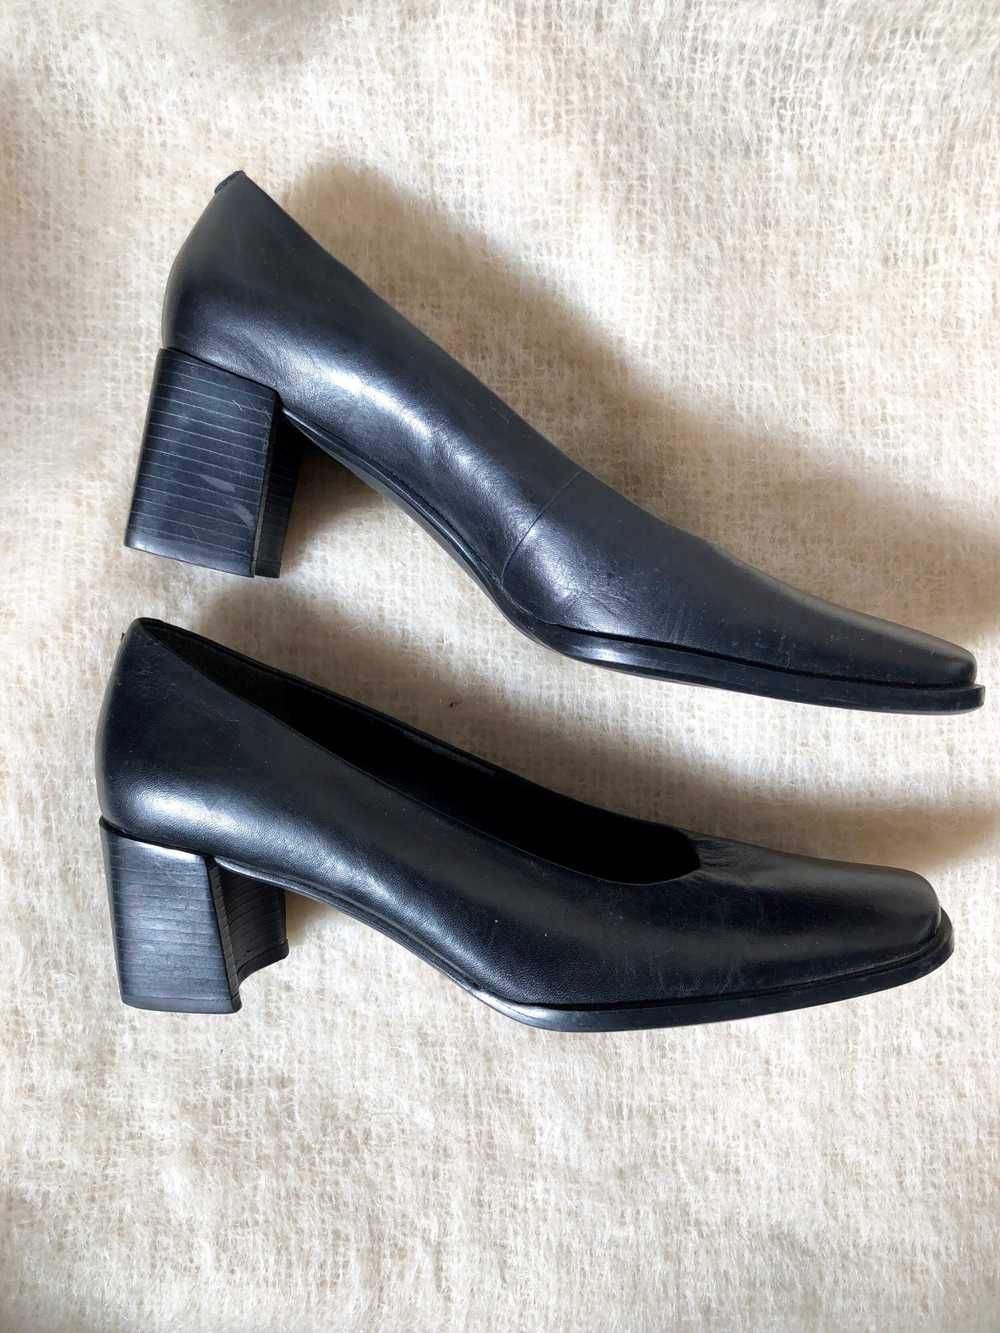 vintage black leather square toe heels / 90s chun… - image 3